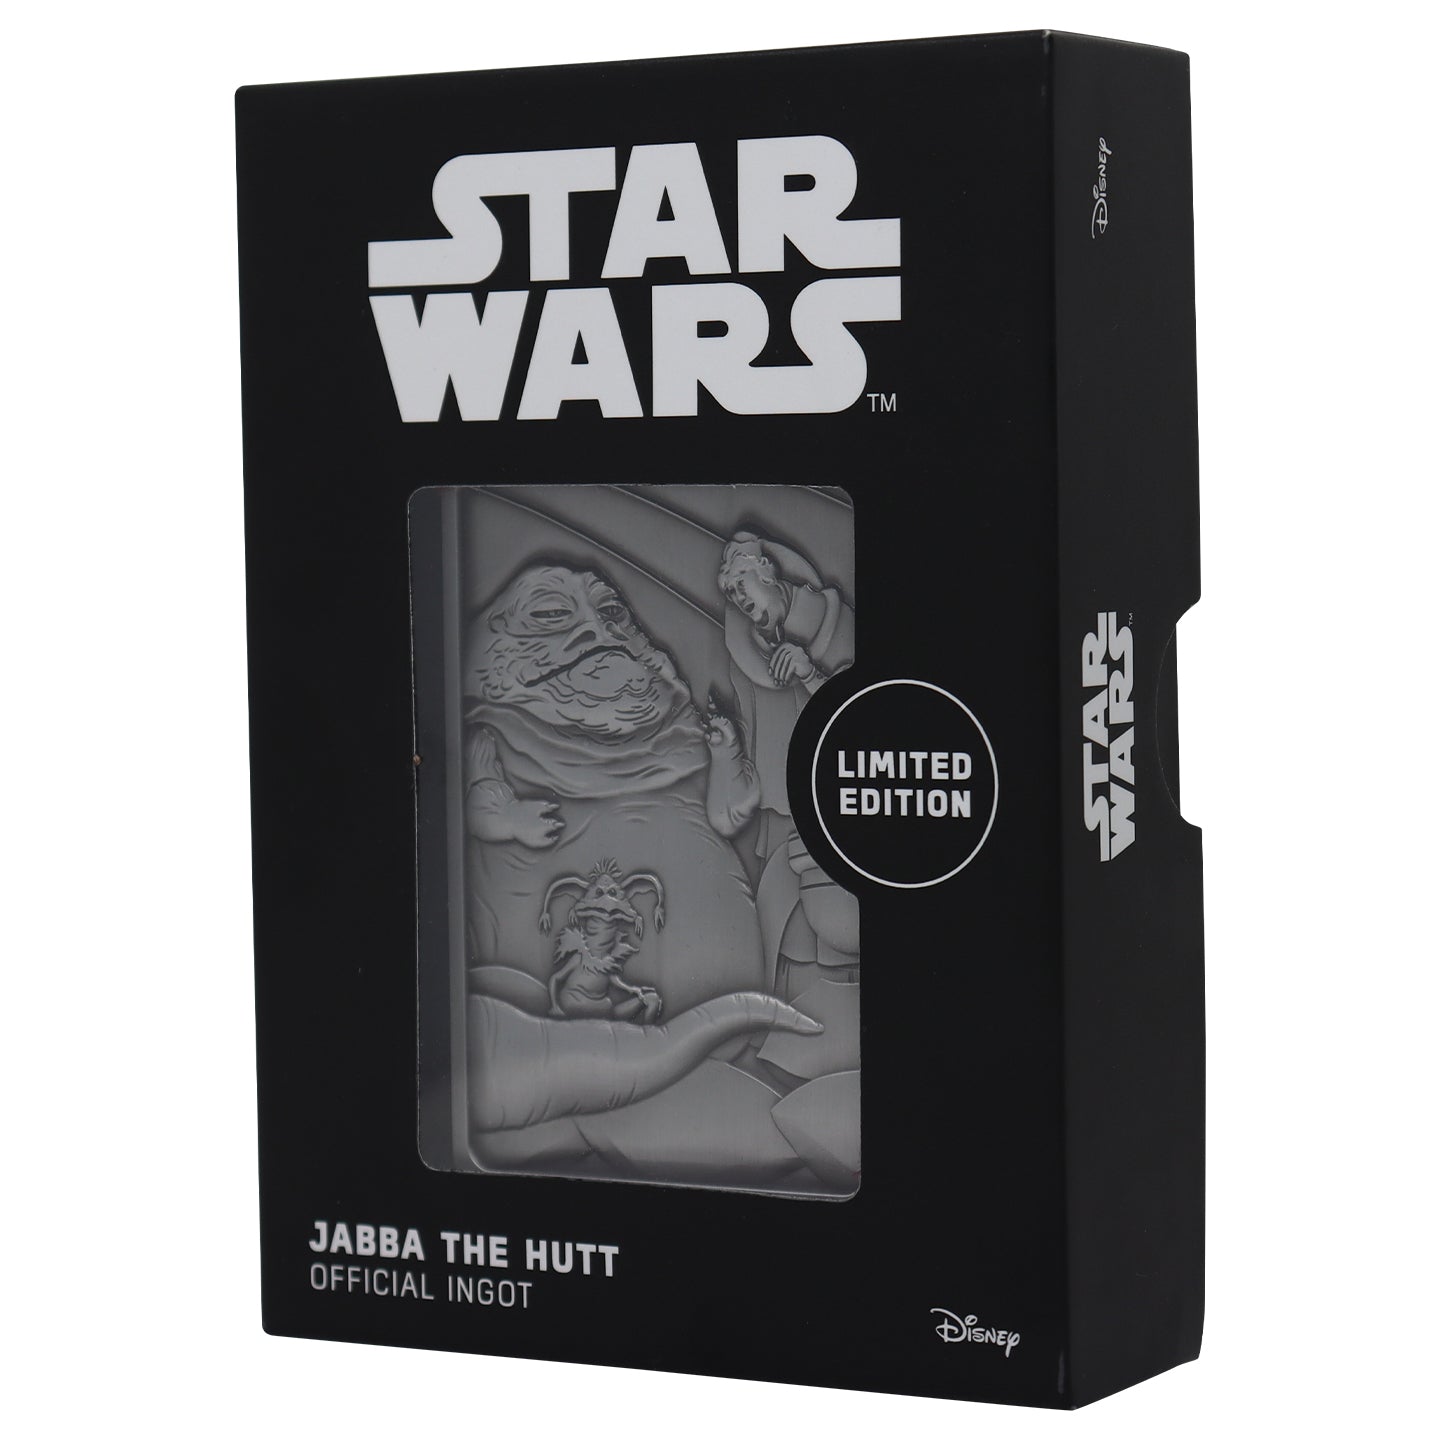 Star Wars Limited Edition Jabba the Hut Ingot